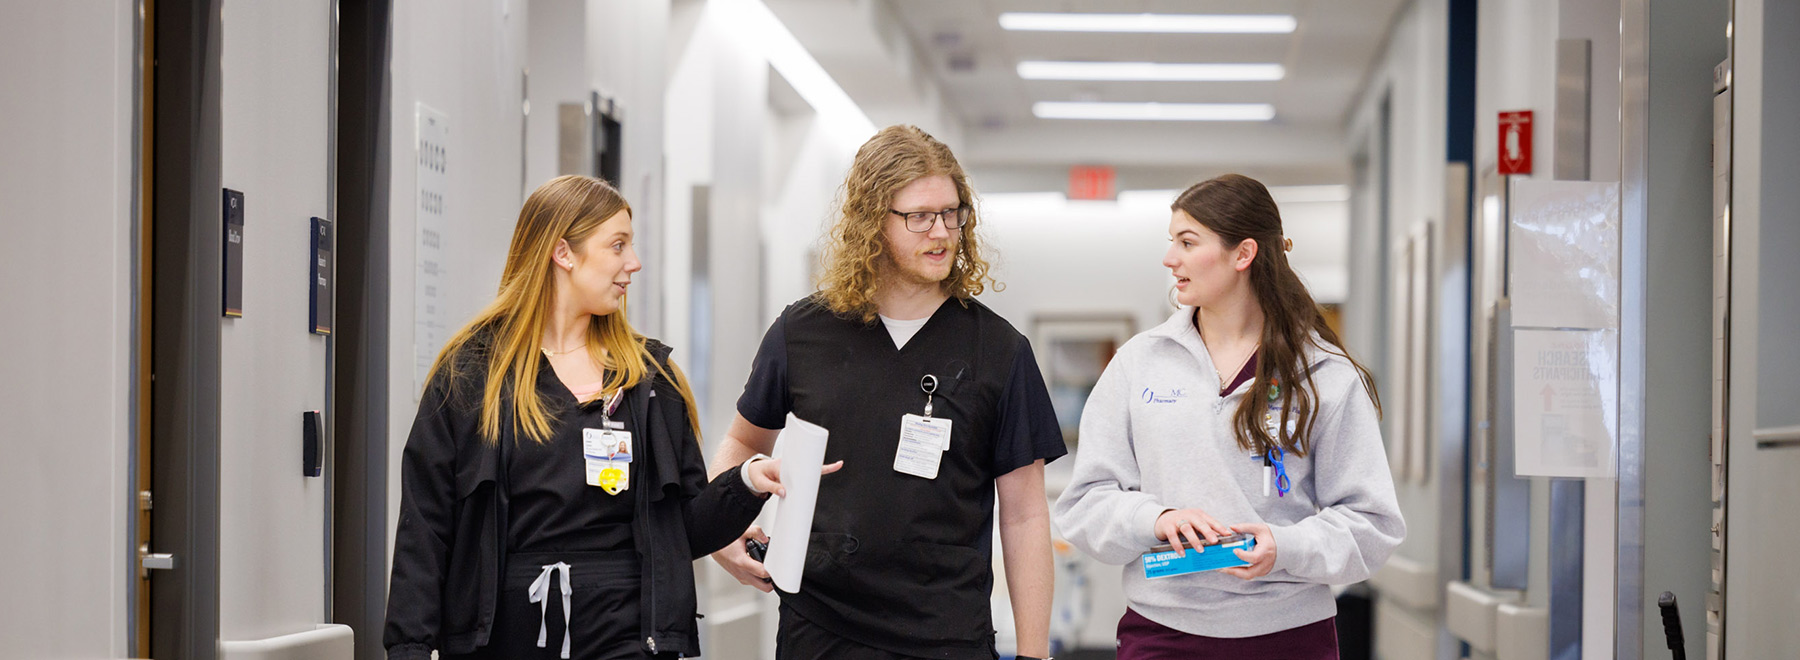 Three pharmacy residents converse while walking down a hospital corridor.